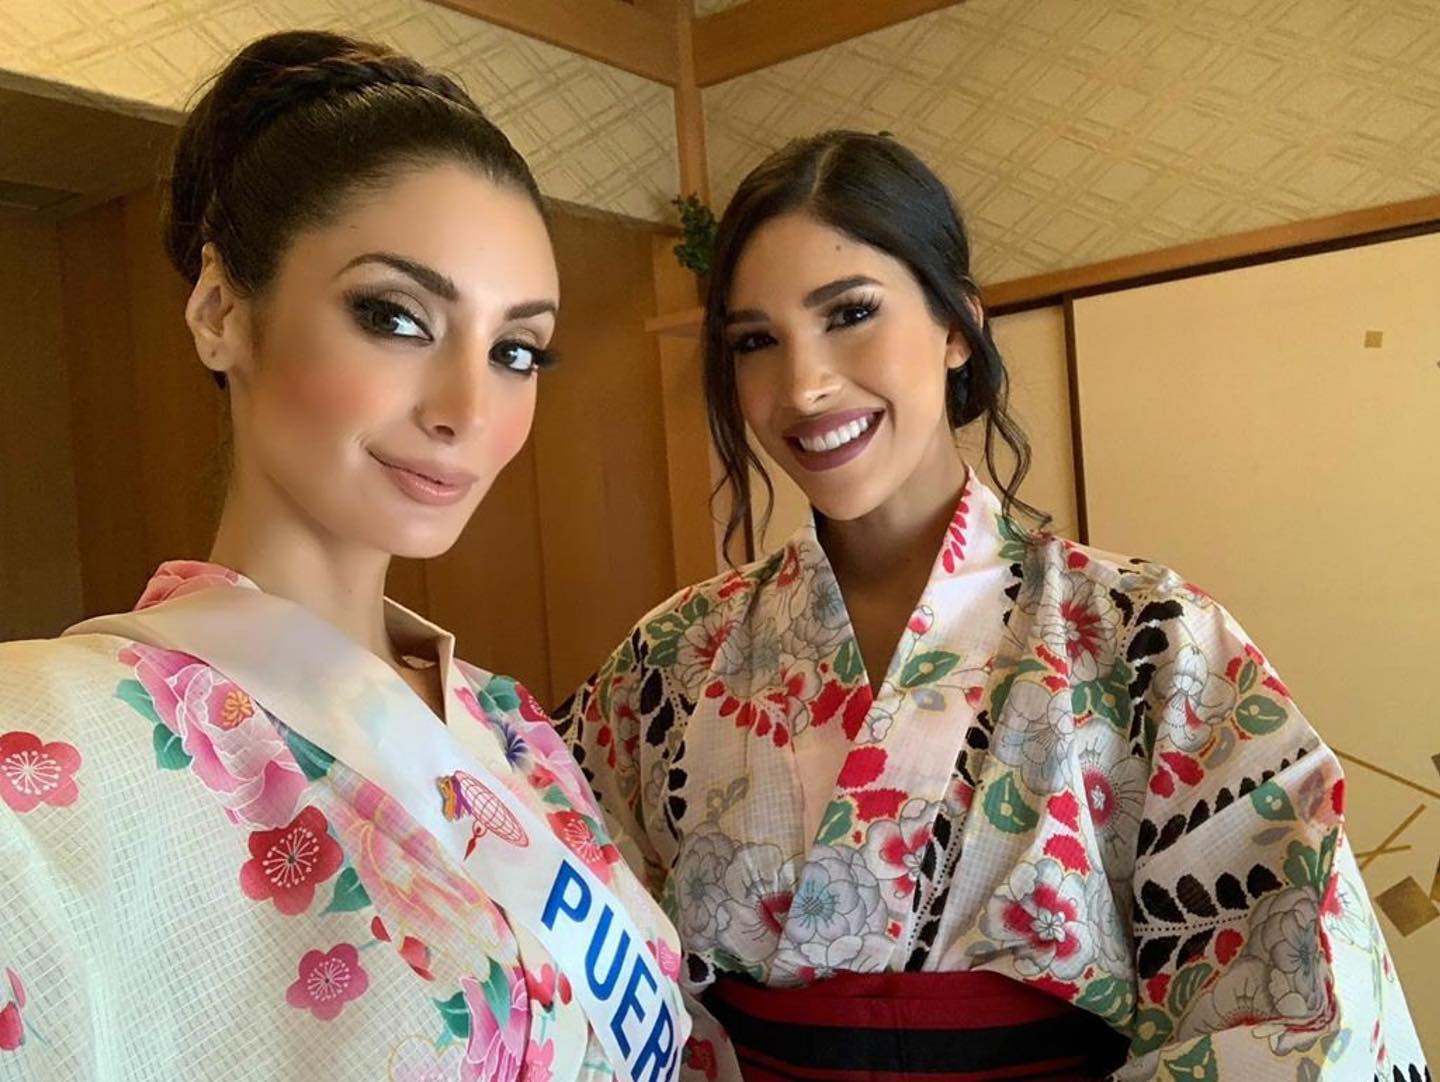 candidatas a miss international 2019 usando tradicional traje tipico japones. Ymeby26f